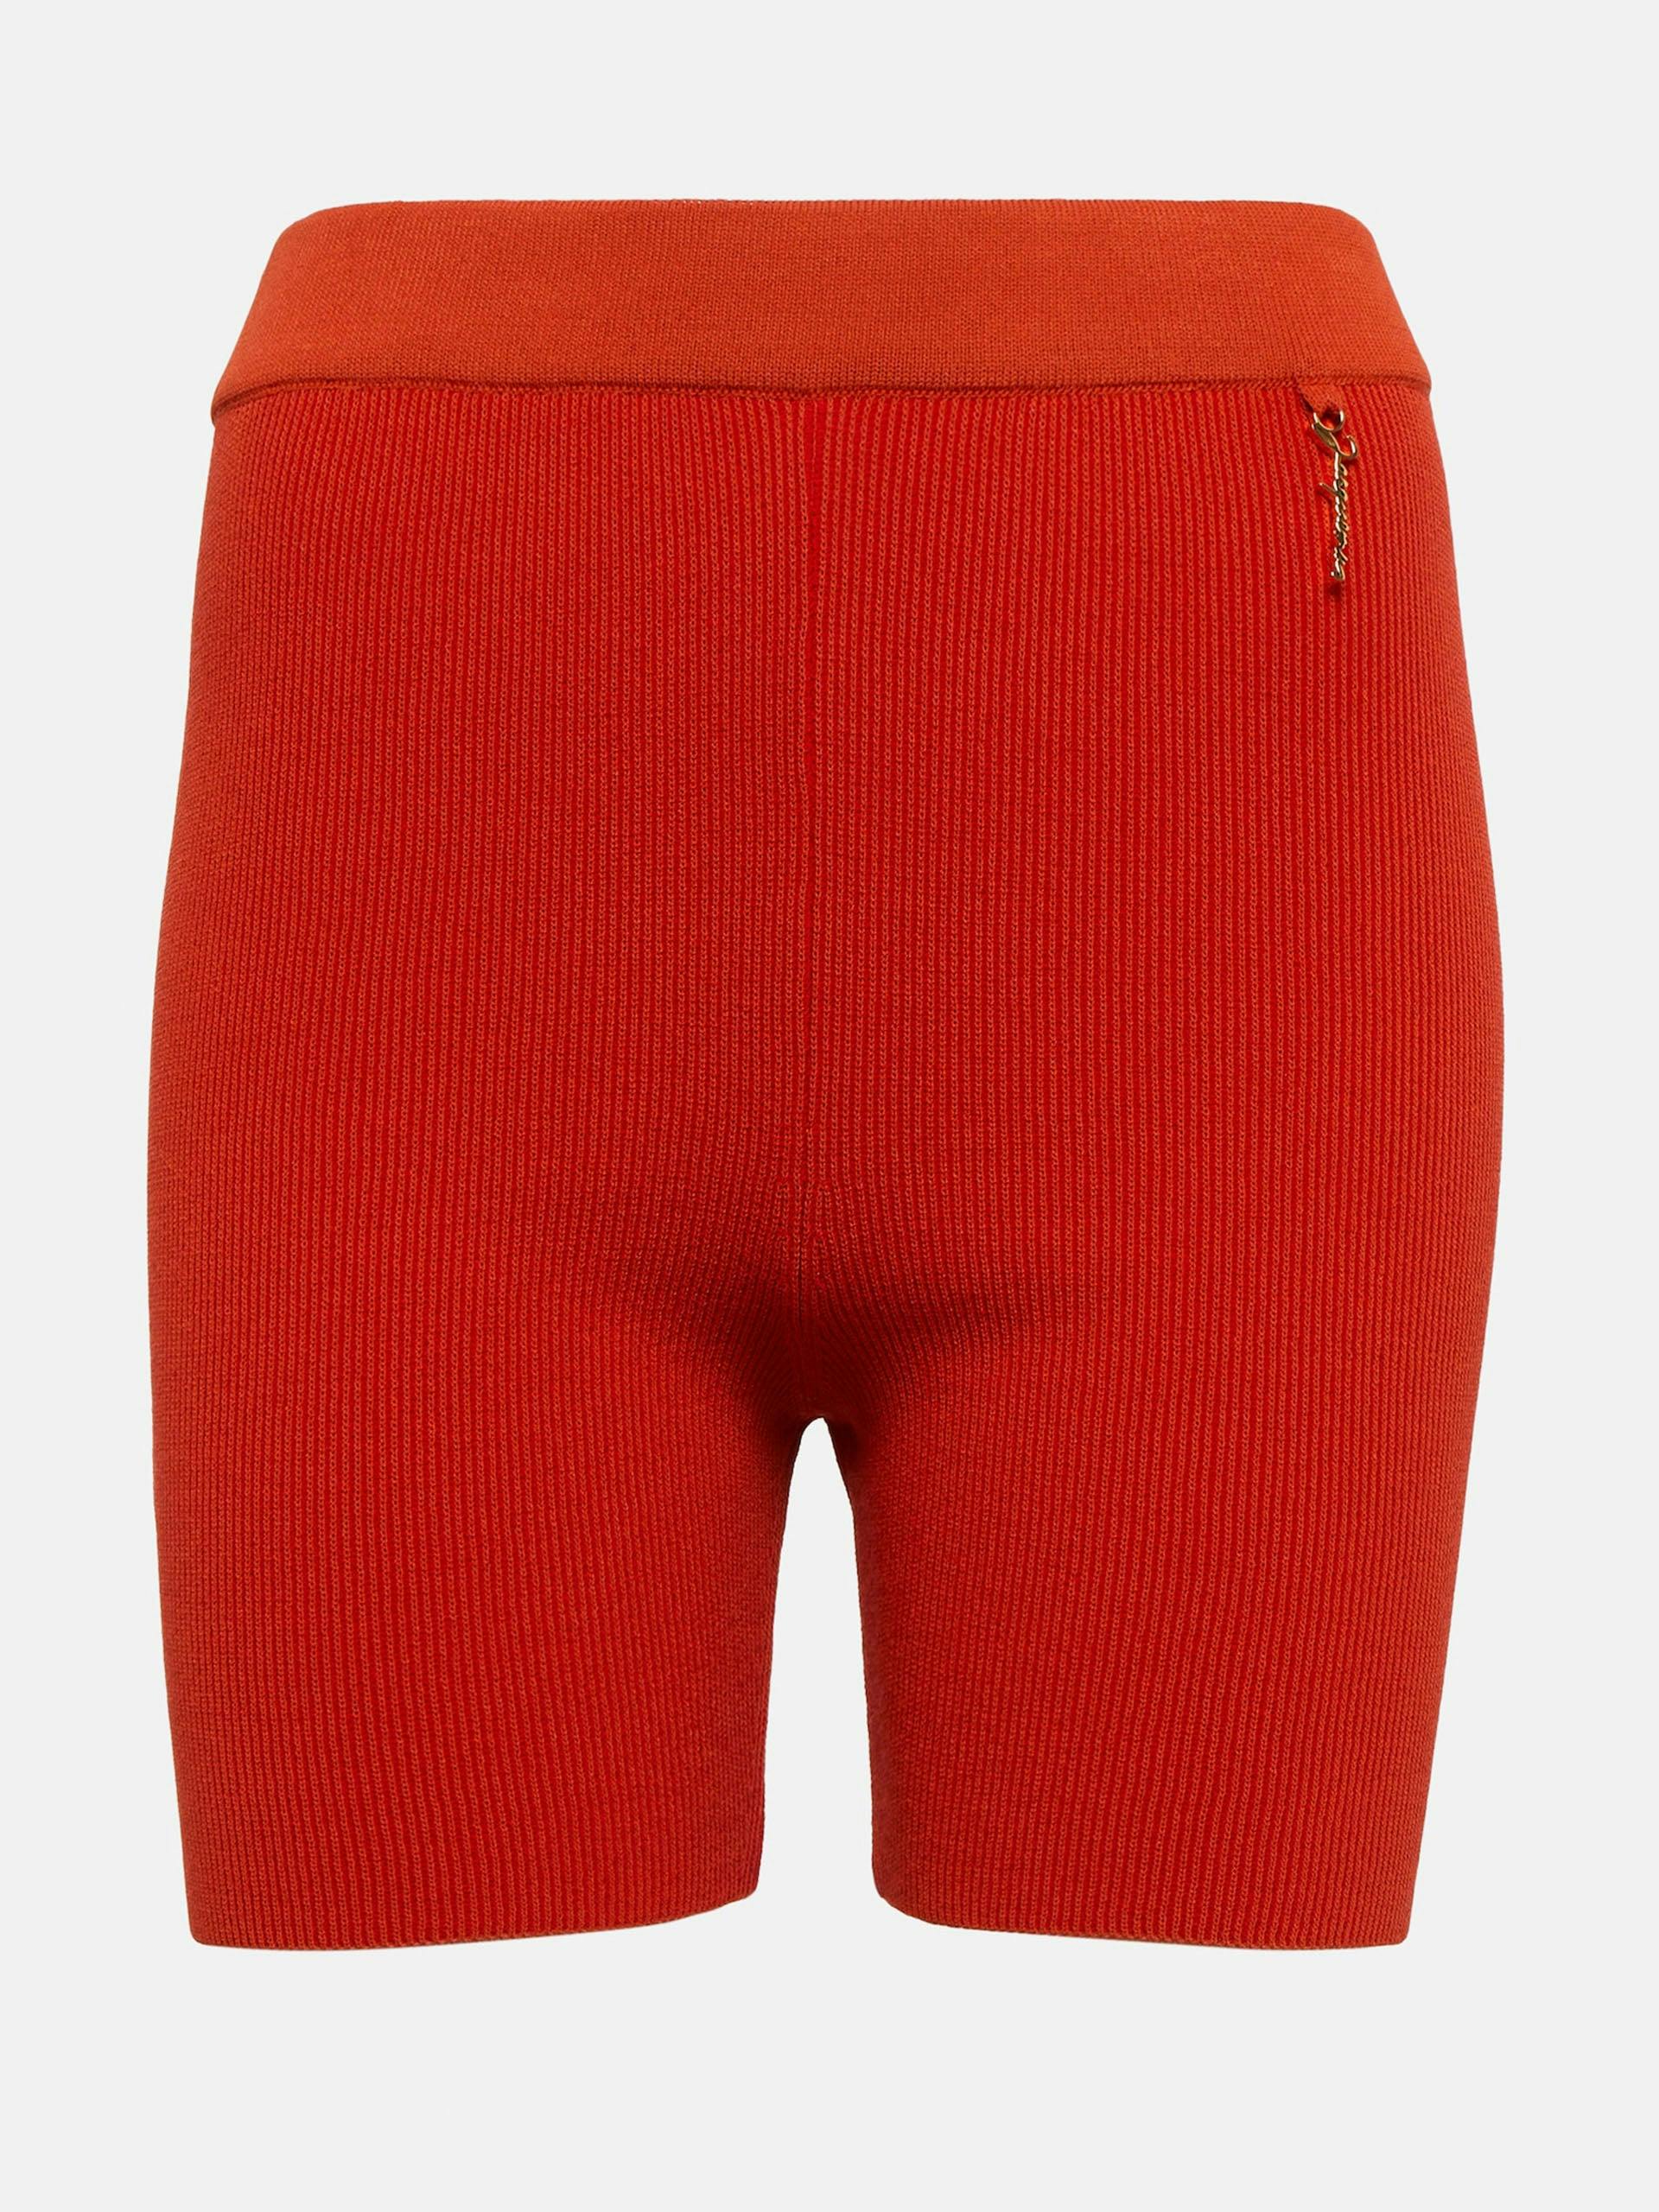 Le Short Pralu ribbed-knit shorts